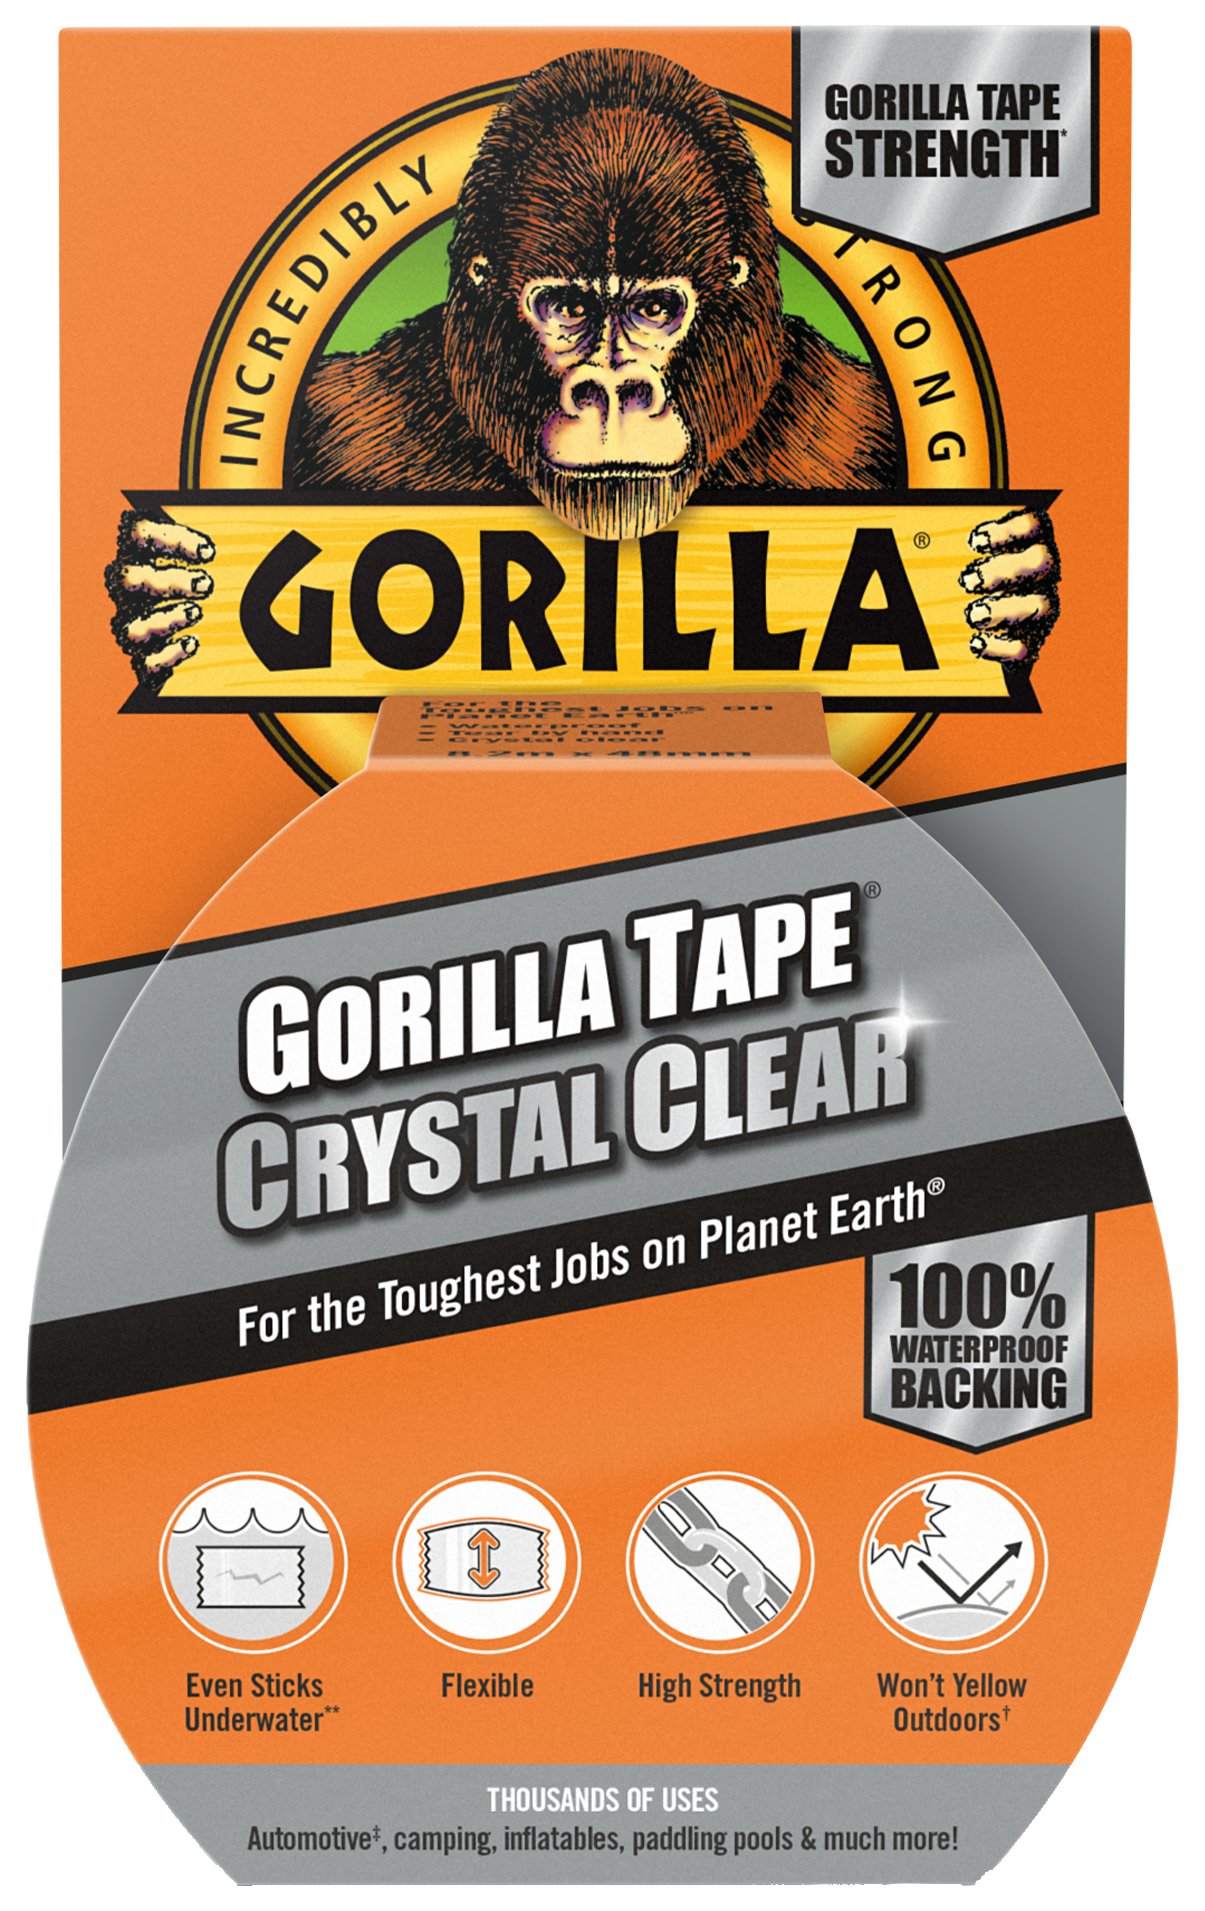 Gorilla Tape Crystal Clear - 48mm x 8.2m